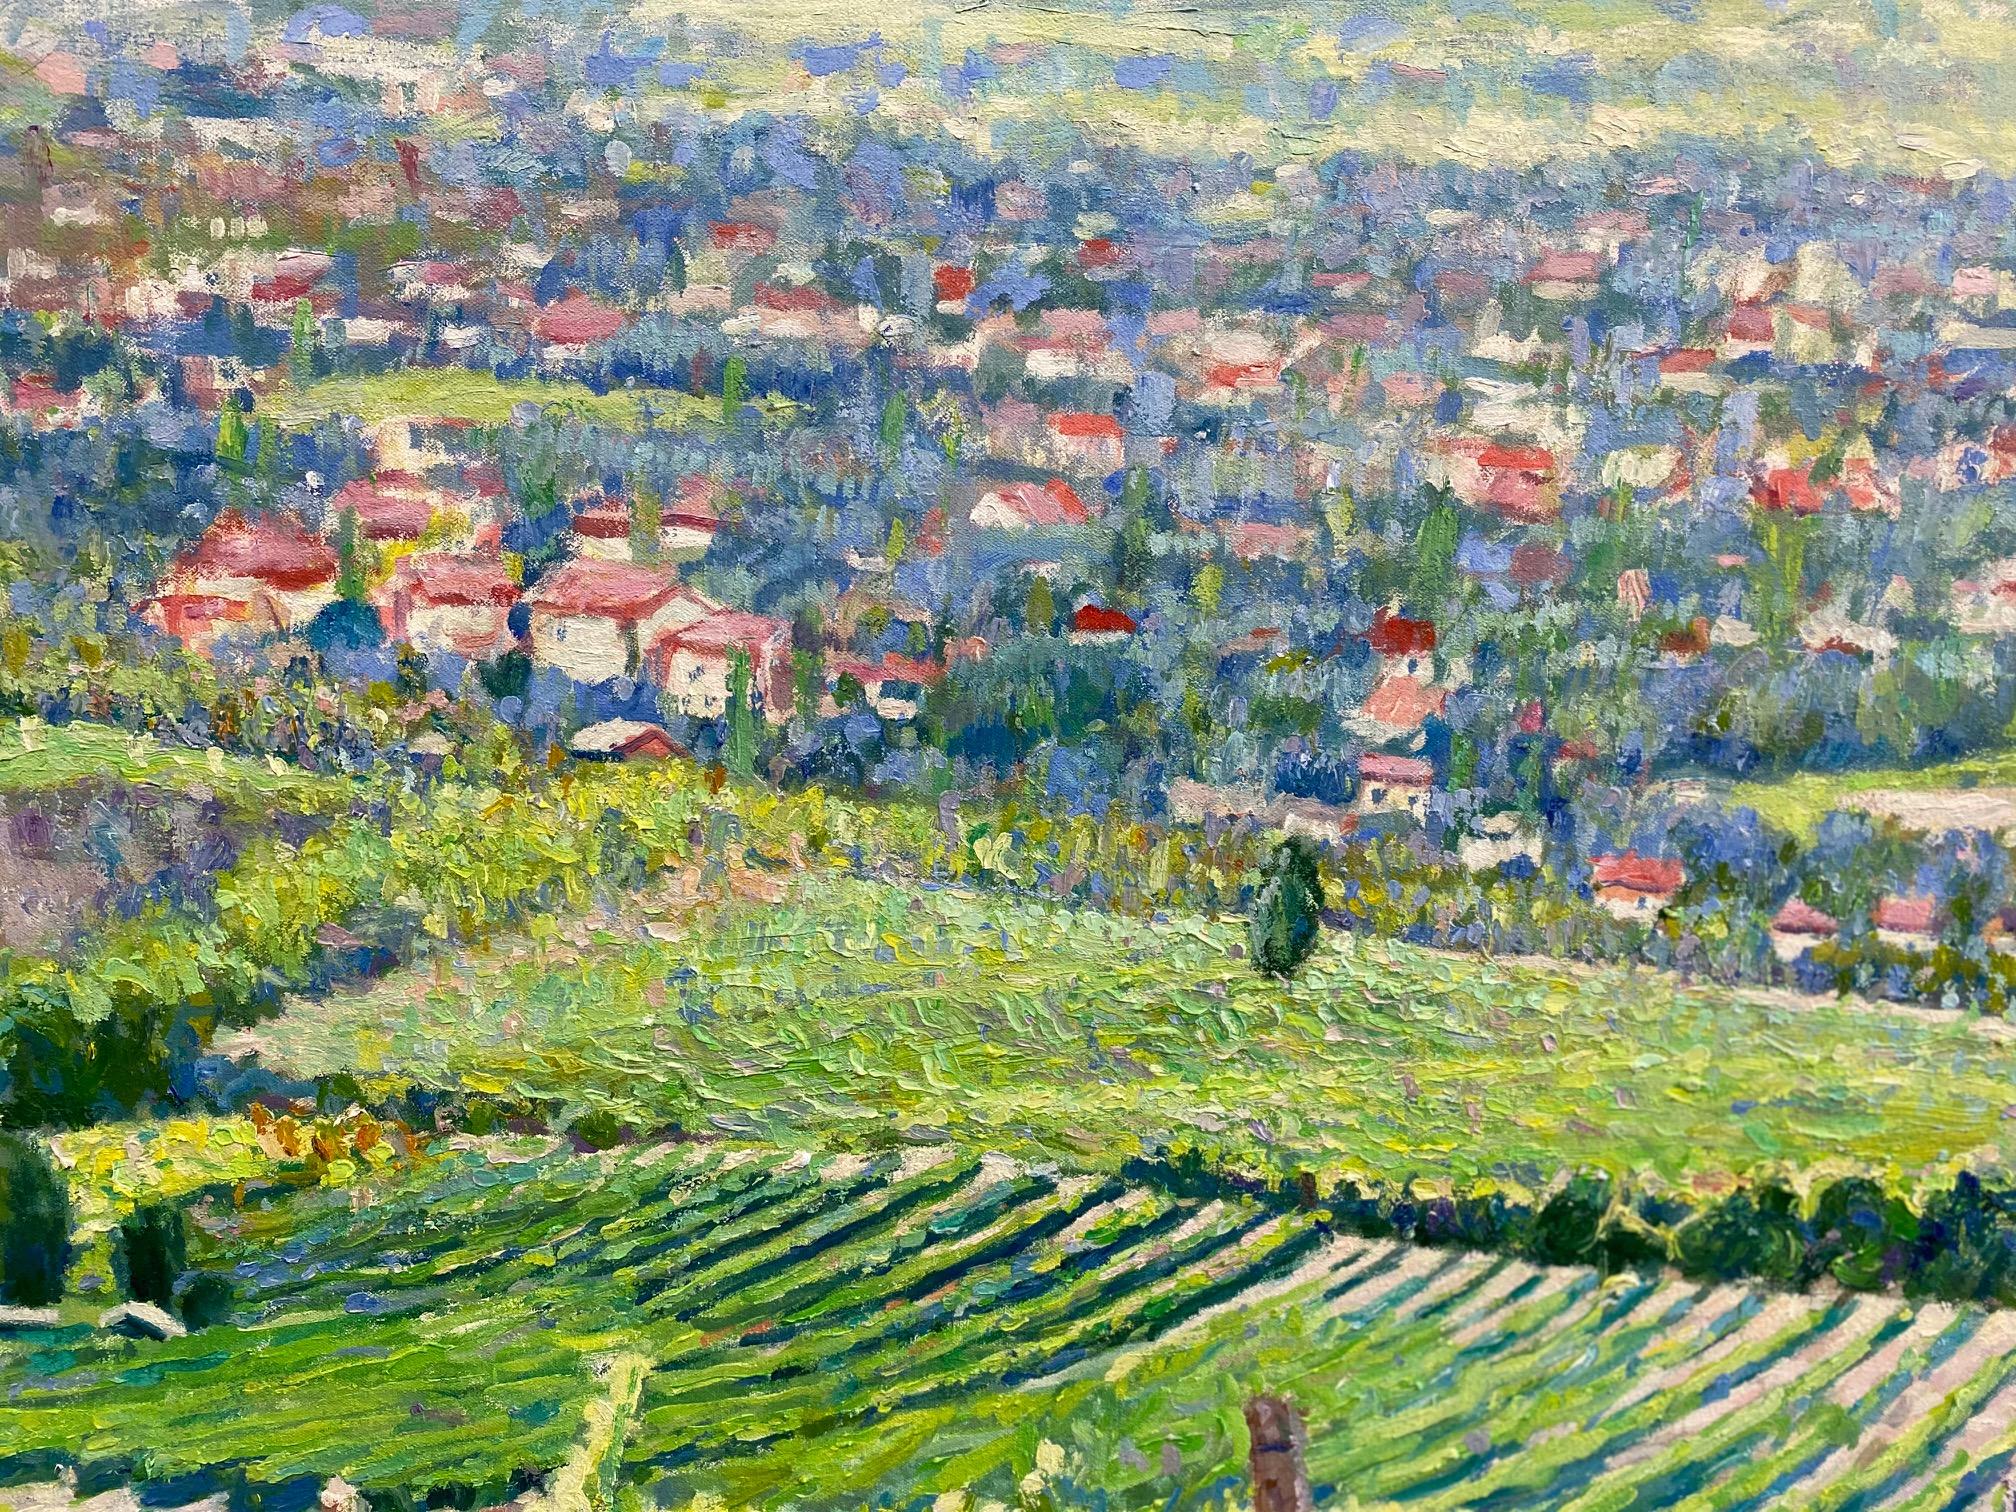 The Vineyards of Sonoma, California 24x36 original impressionist landscape - Impressionist Painting by Eugene Maziarz